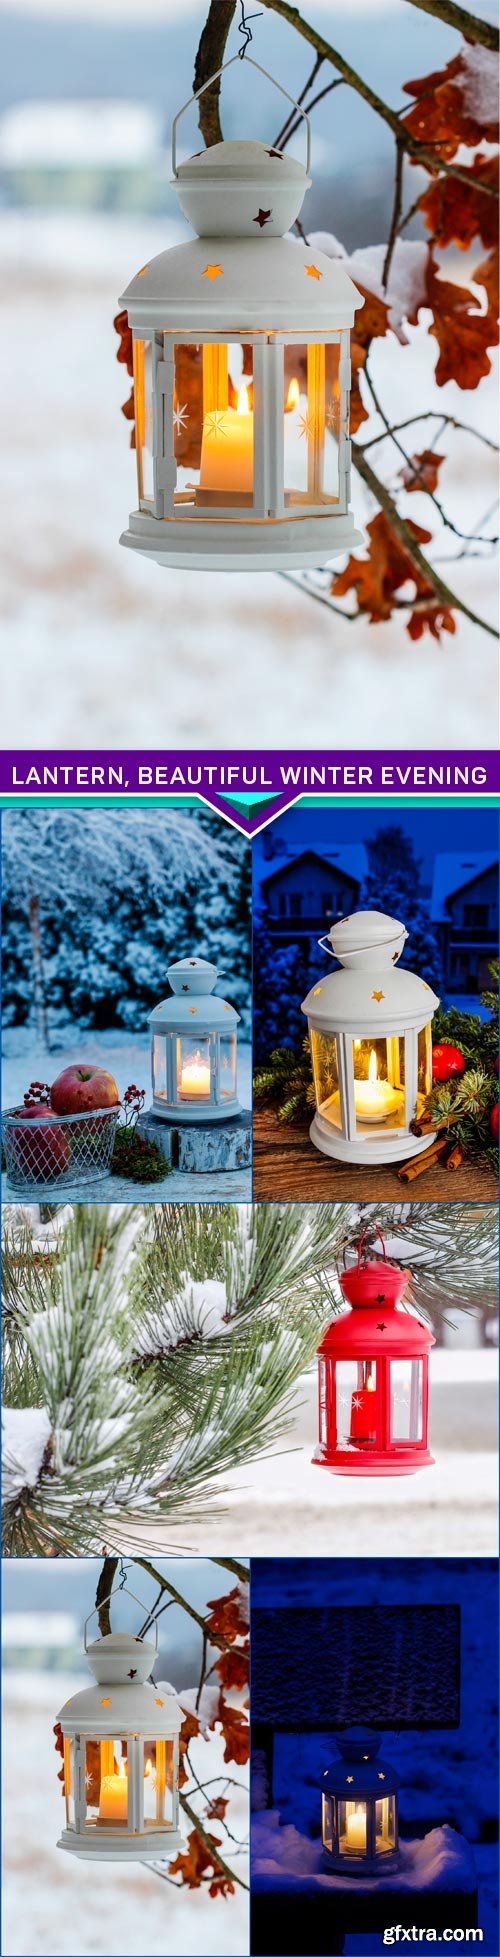 lantern, beautiful winter evening 5X JPEG